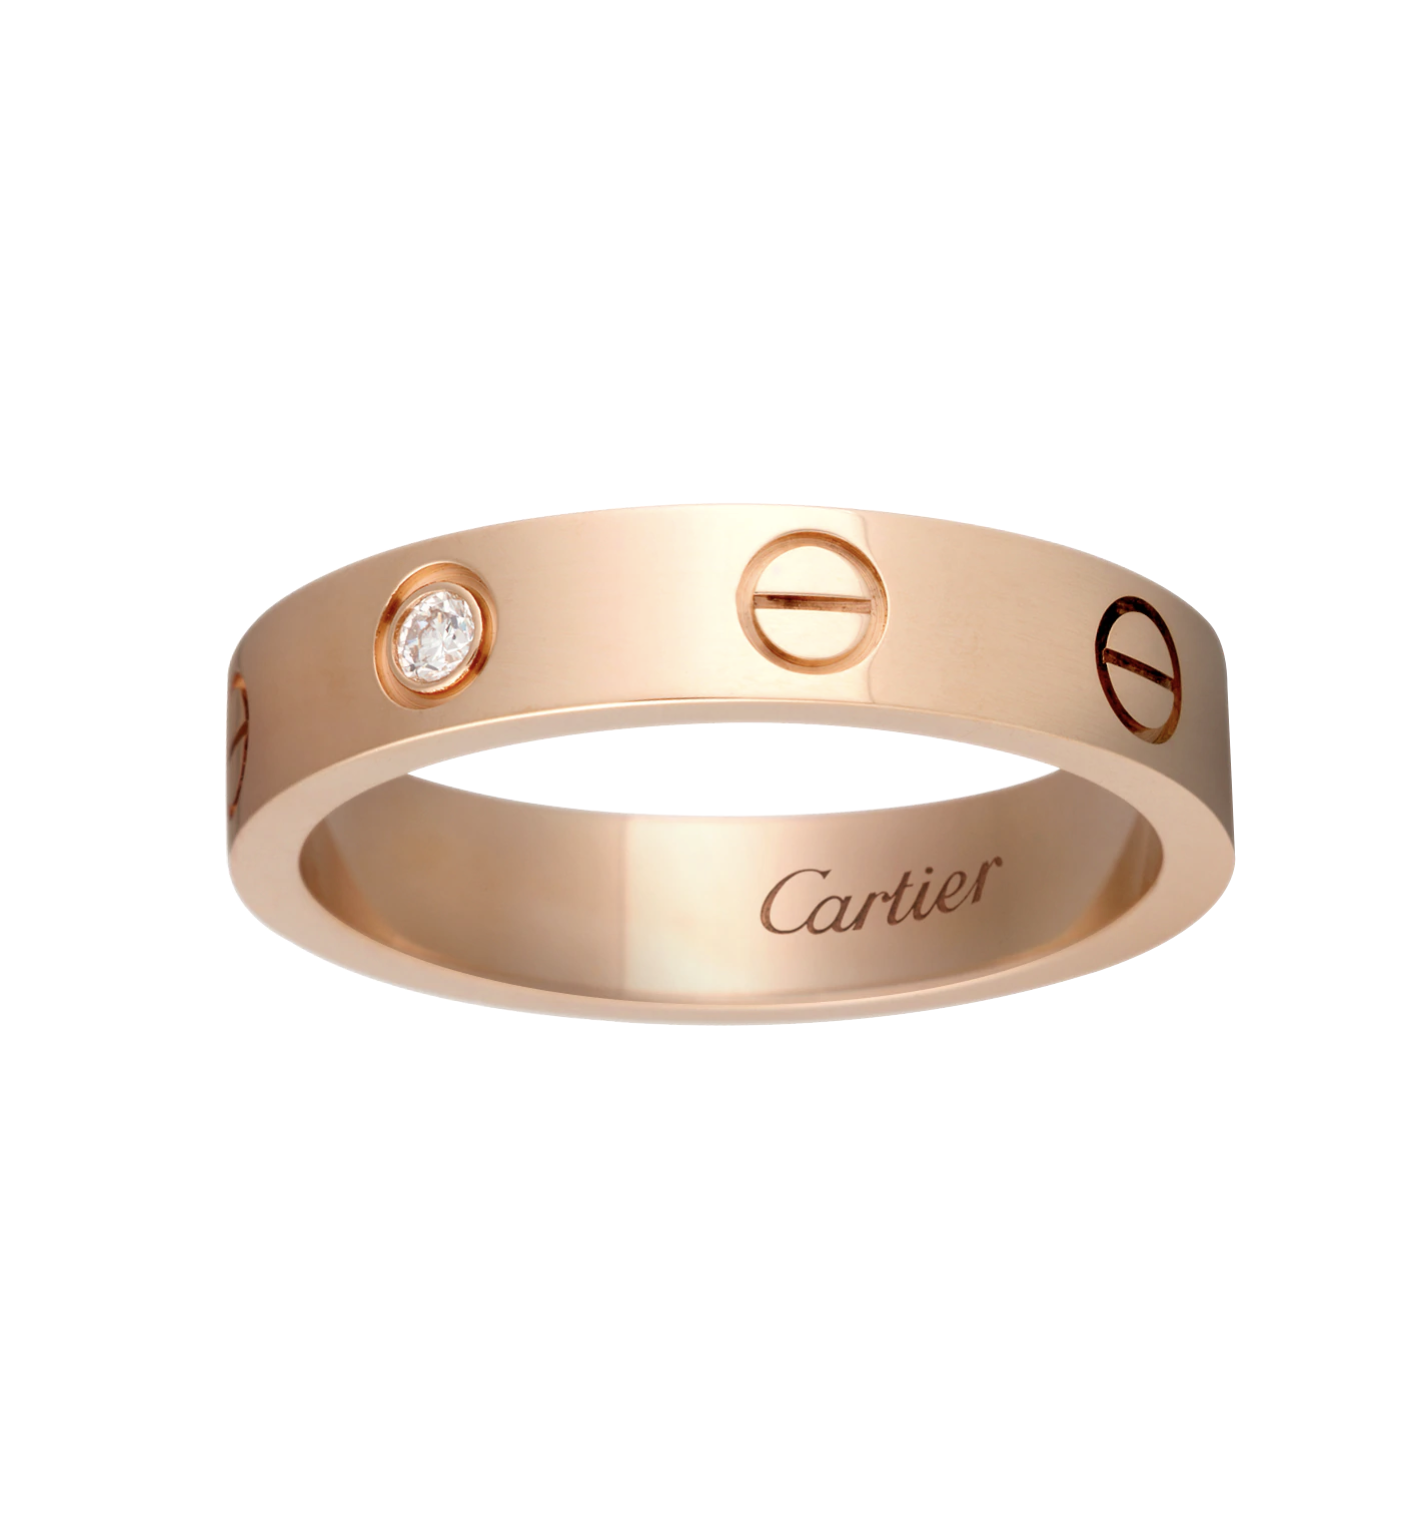 Cartier全新網購體驗｜送給女朋友的夢幻禮物之選 卡地亞珠寶腕錶推介